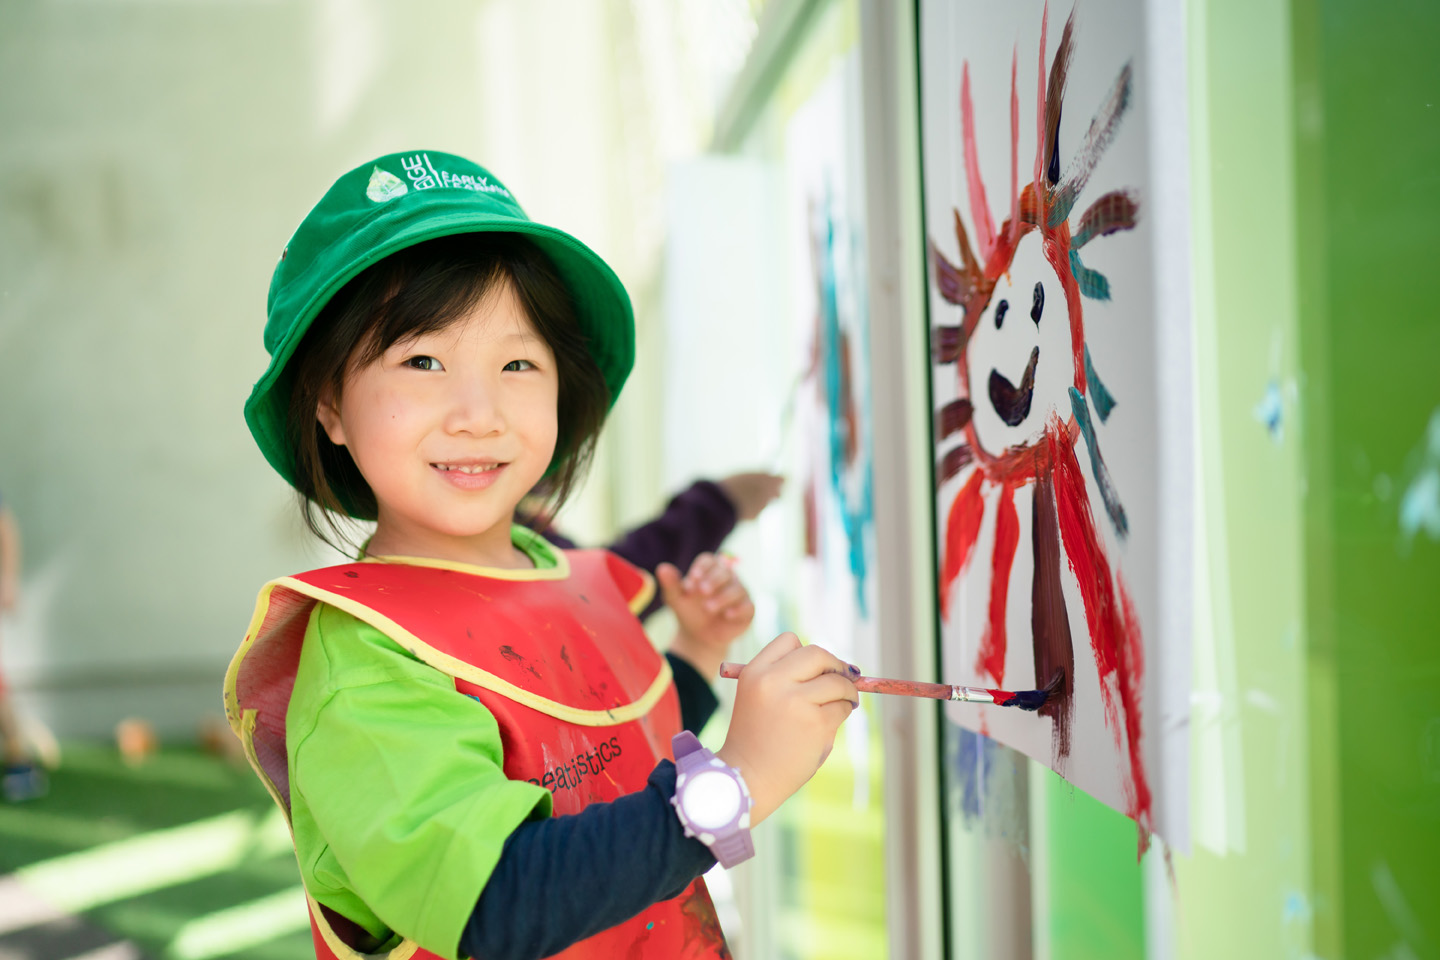 South Brisbane Child painting